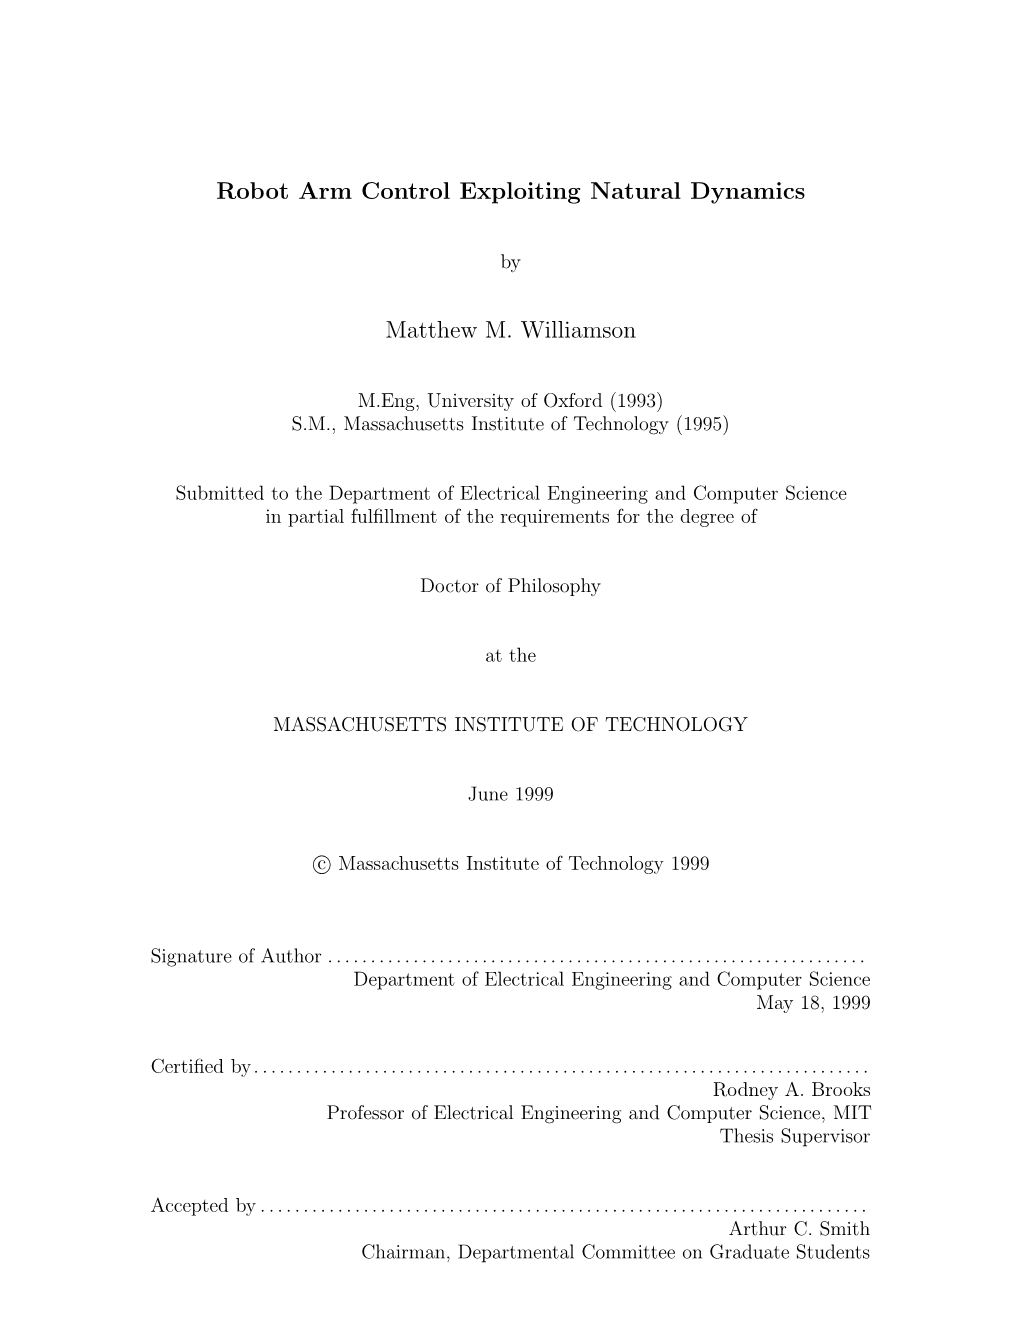 Robot Arm Control Exploiting Natural Dynamics Matthew M. Williamson